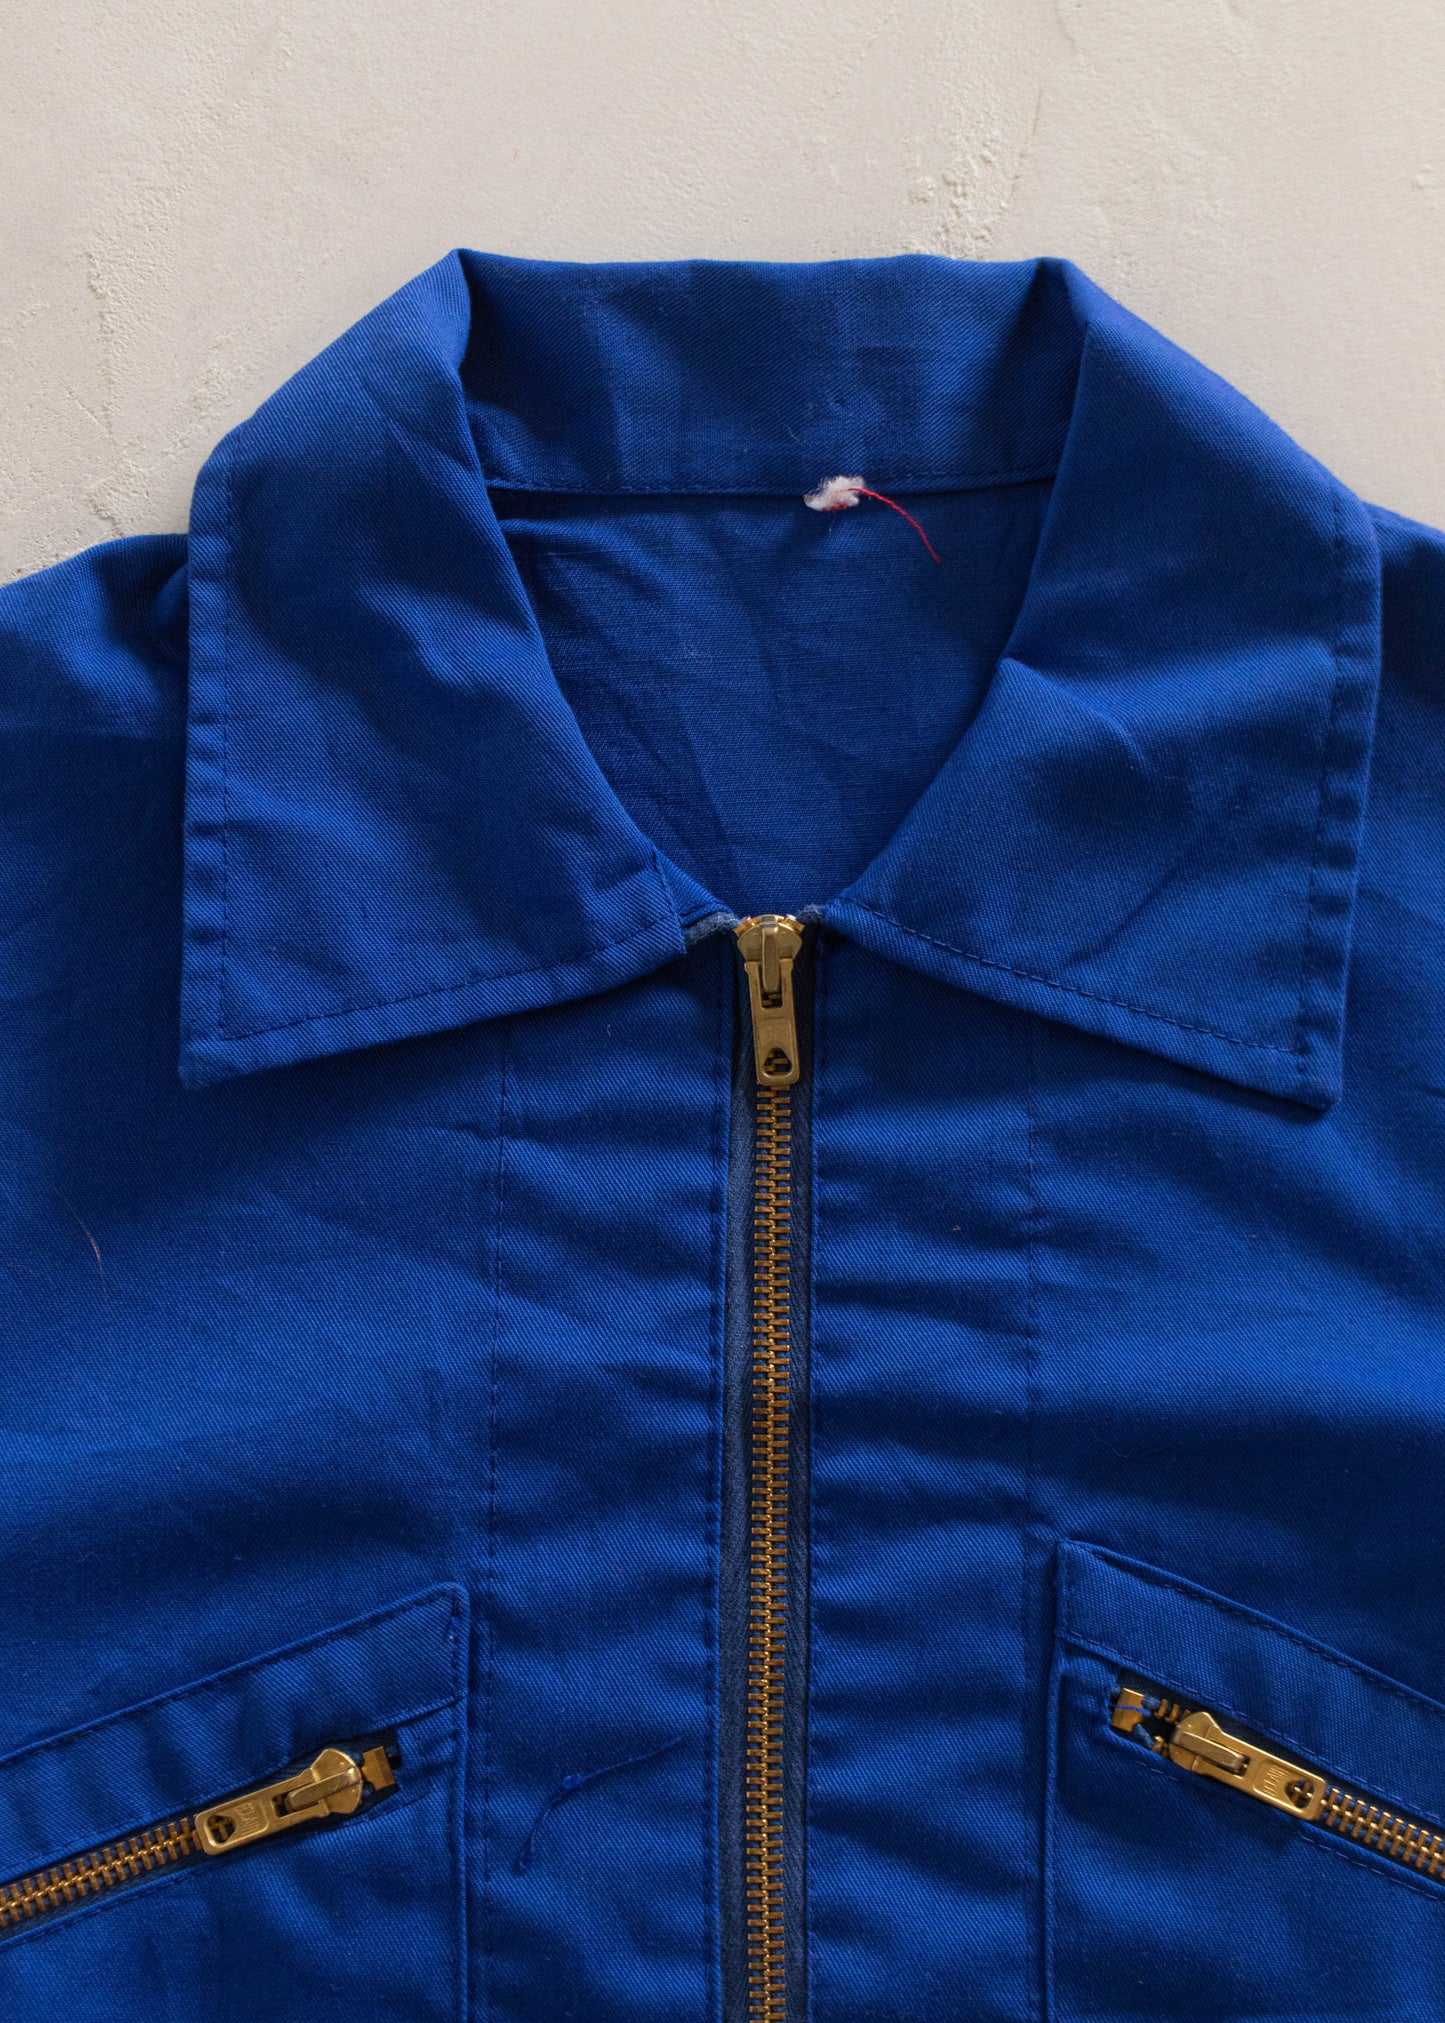 1980s European Workwear Zip Up Chore Jacket Size XS/S